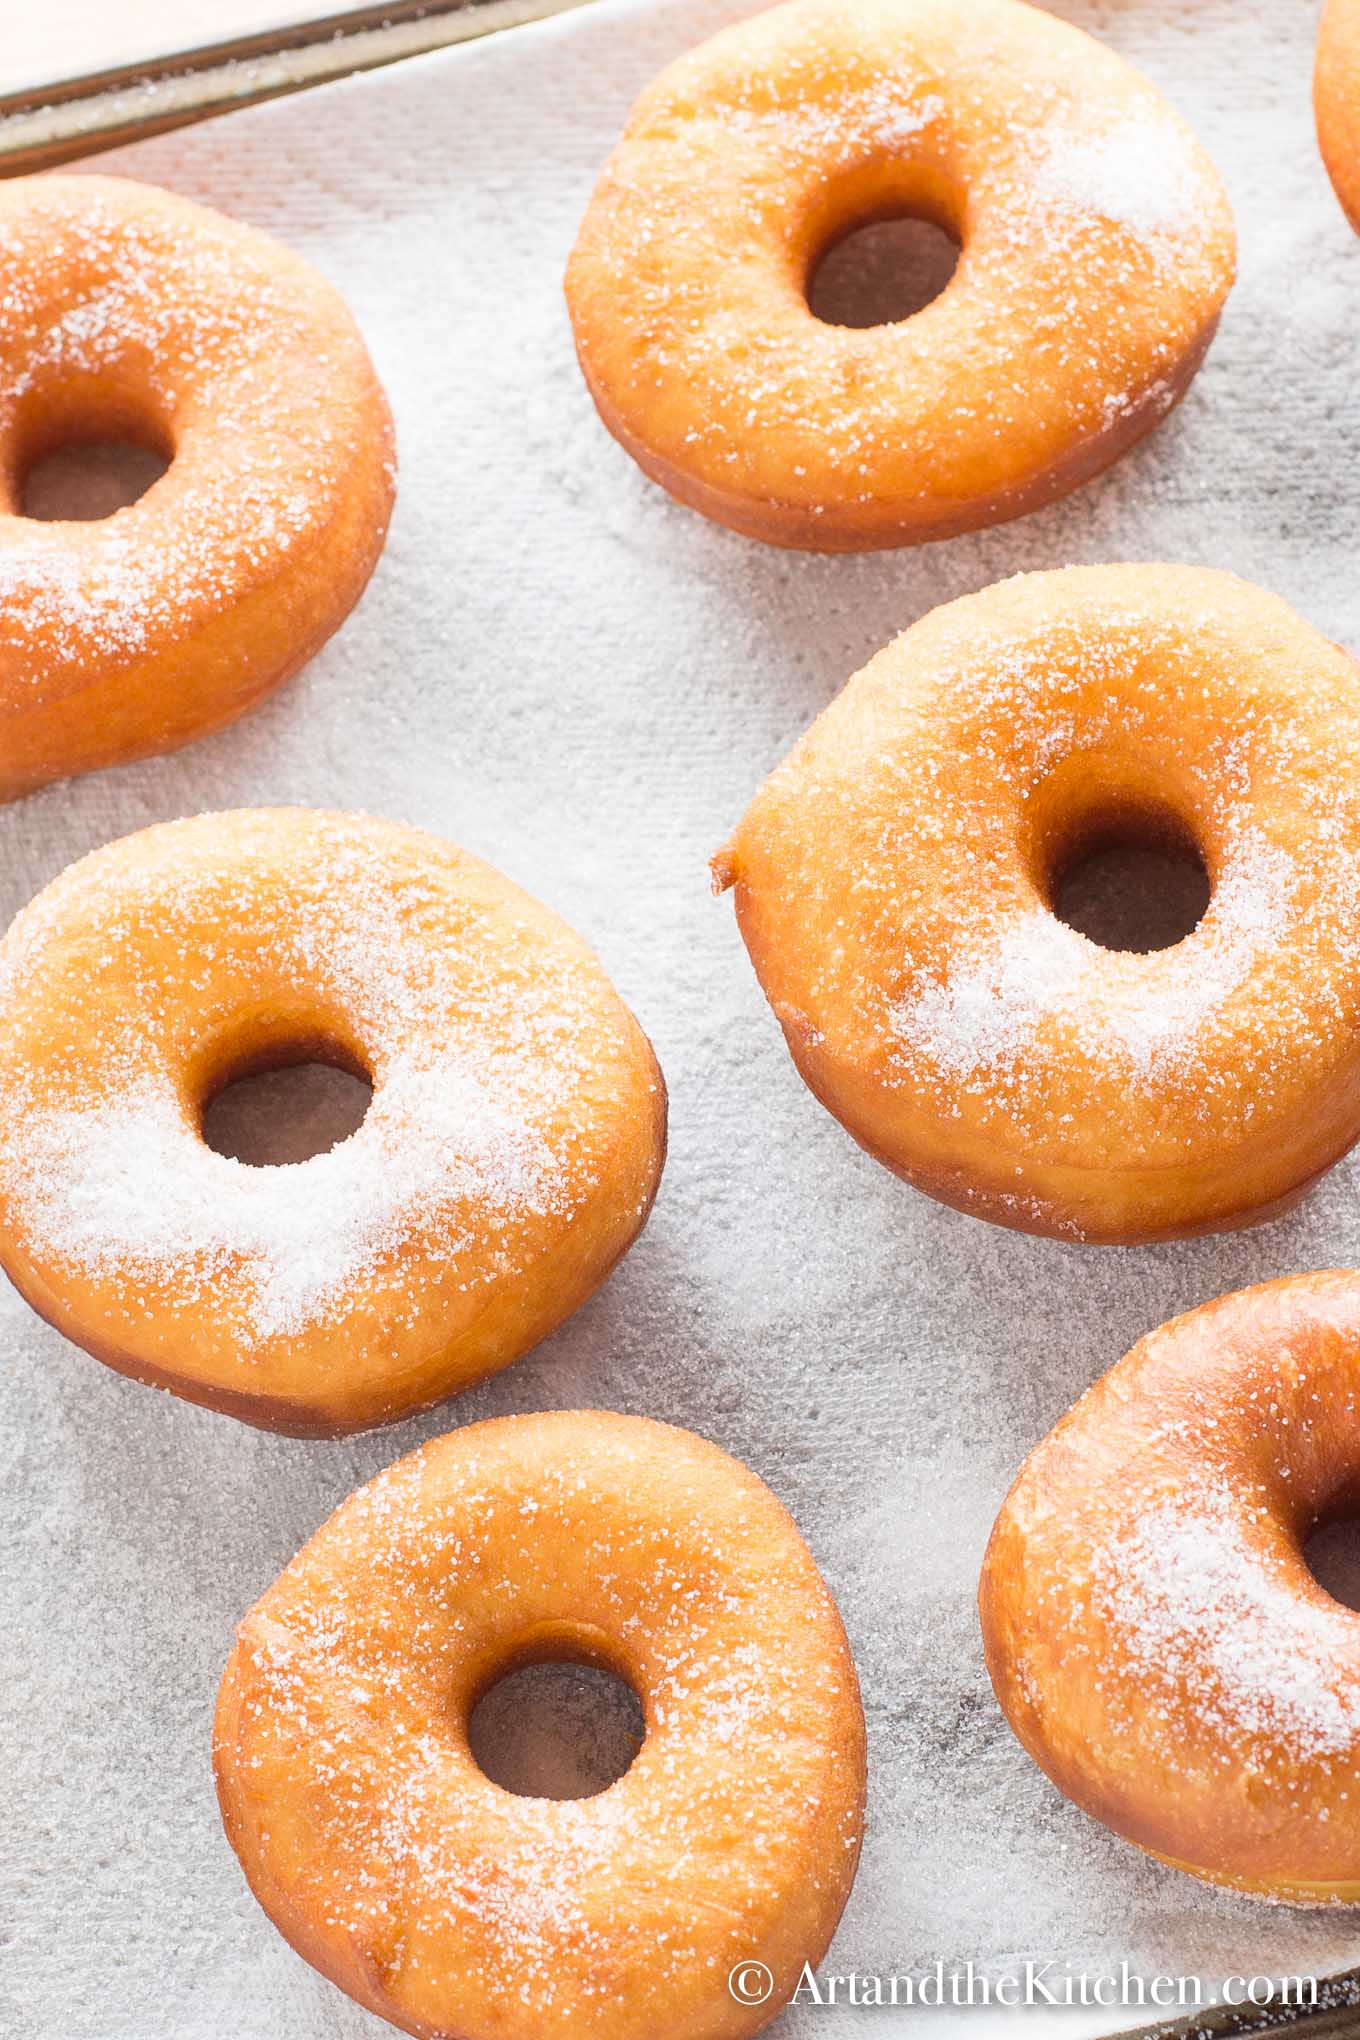 Freshly baked donuts sprinkled with sugar on white napkin.